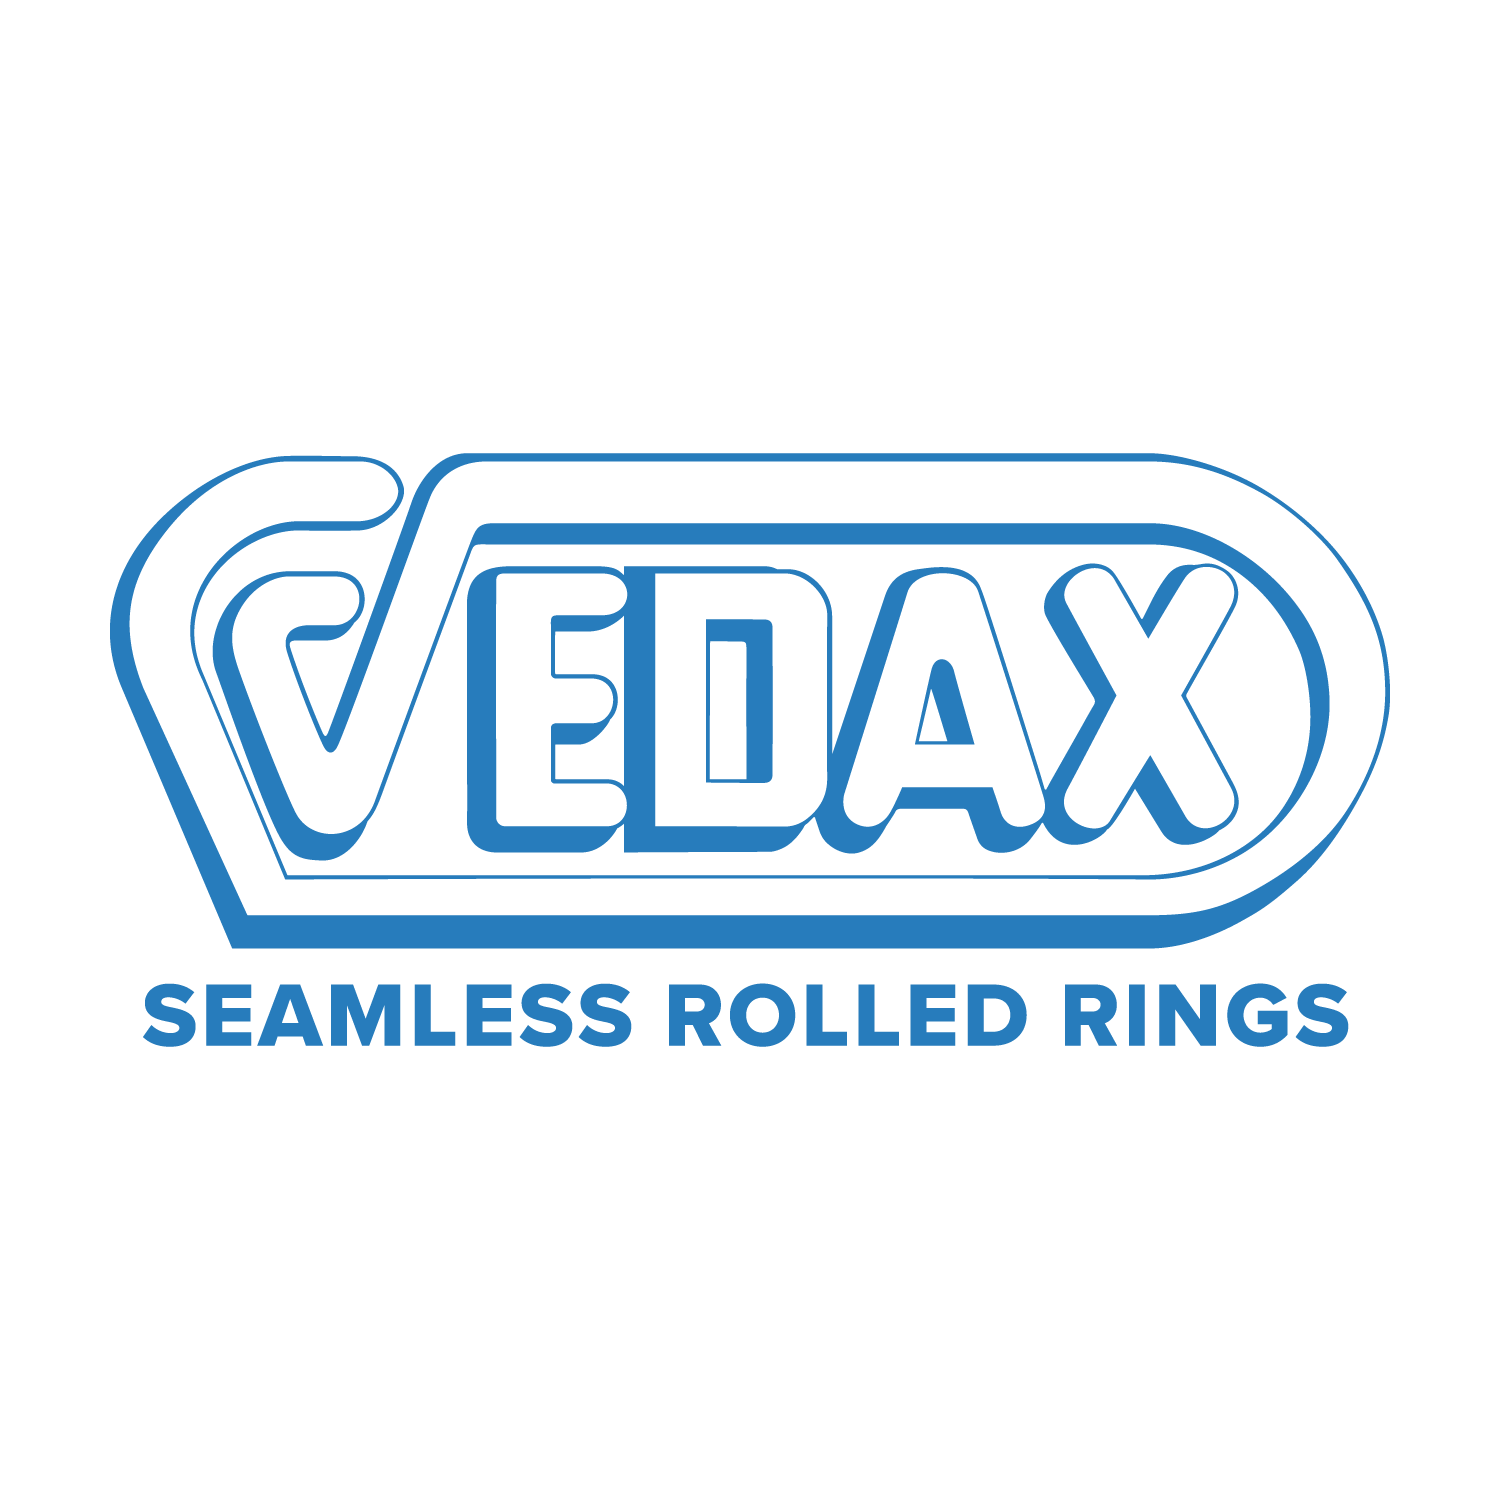 Vedax logo customized